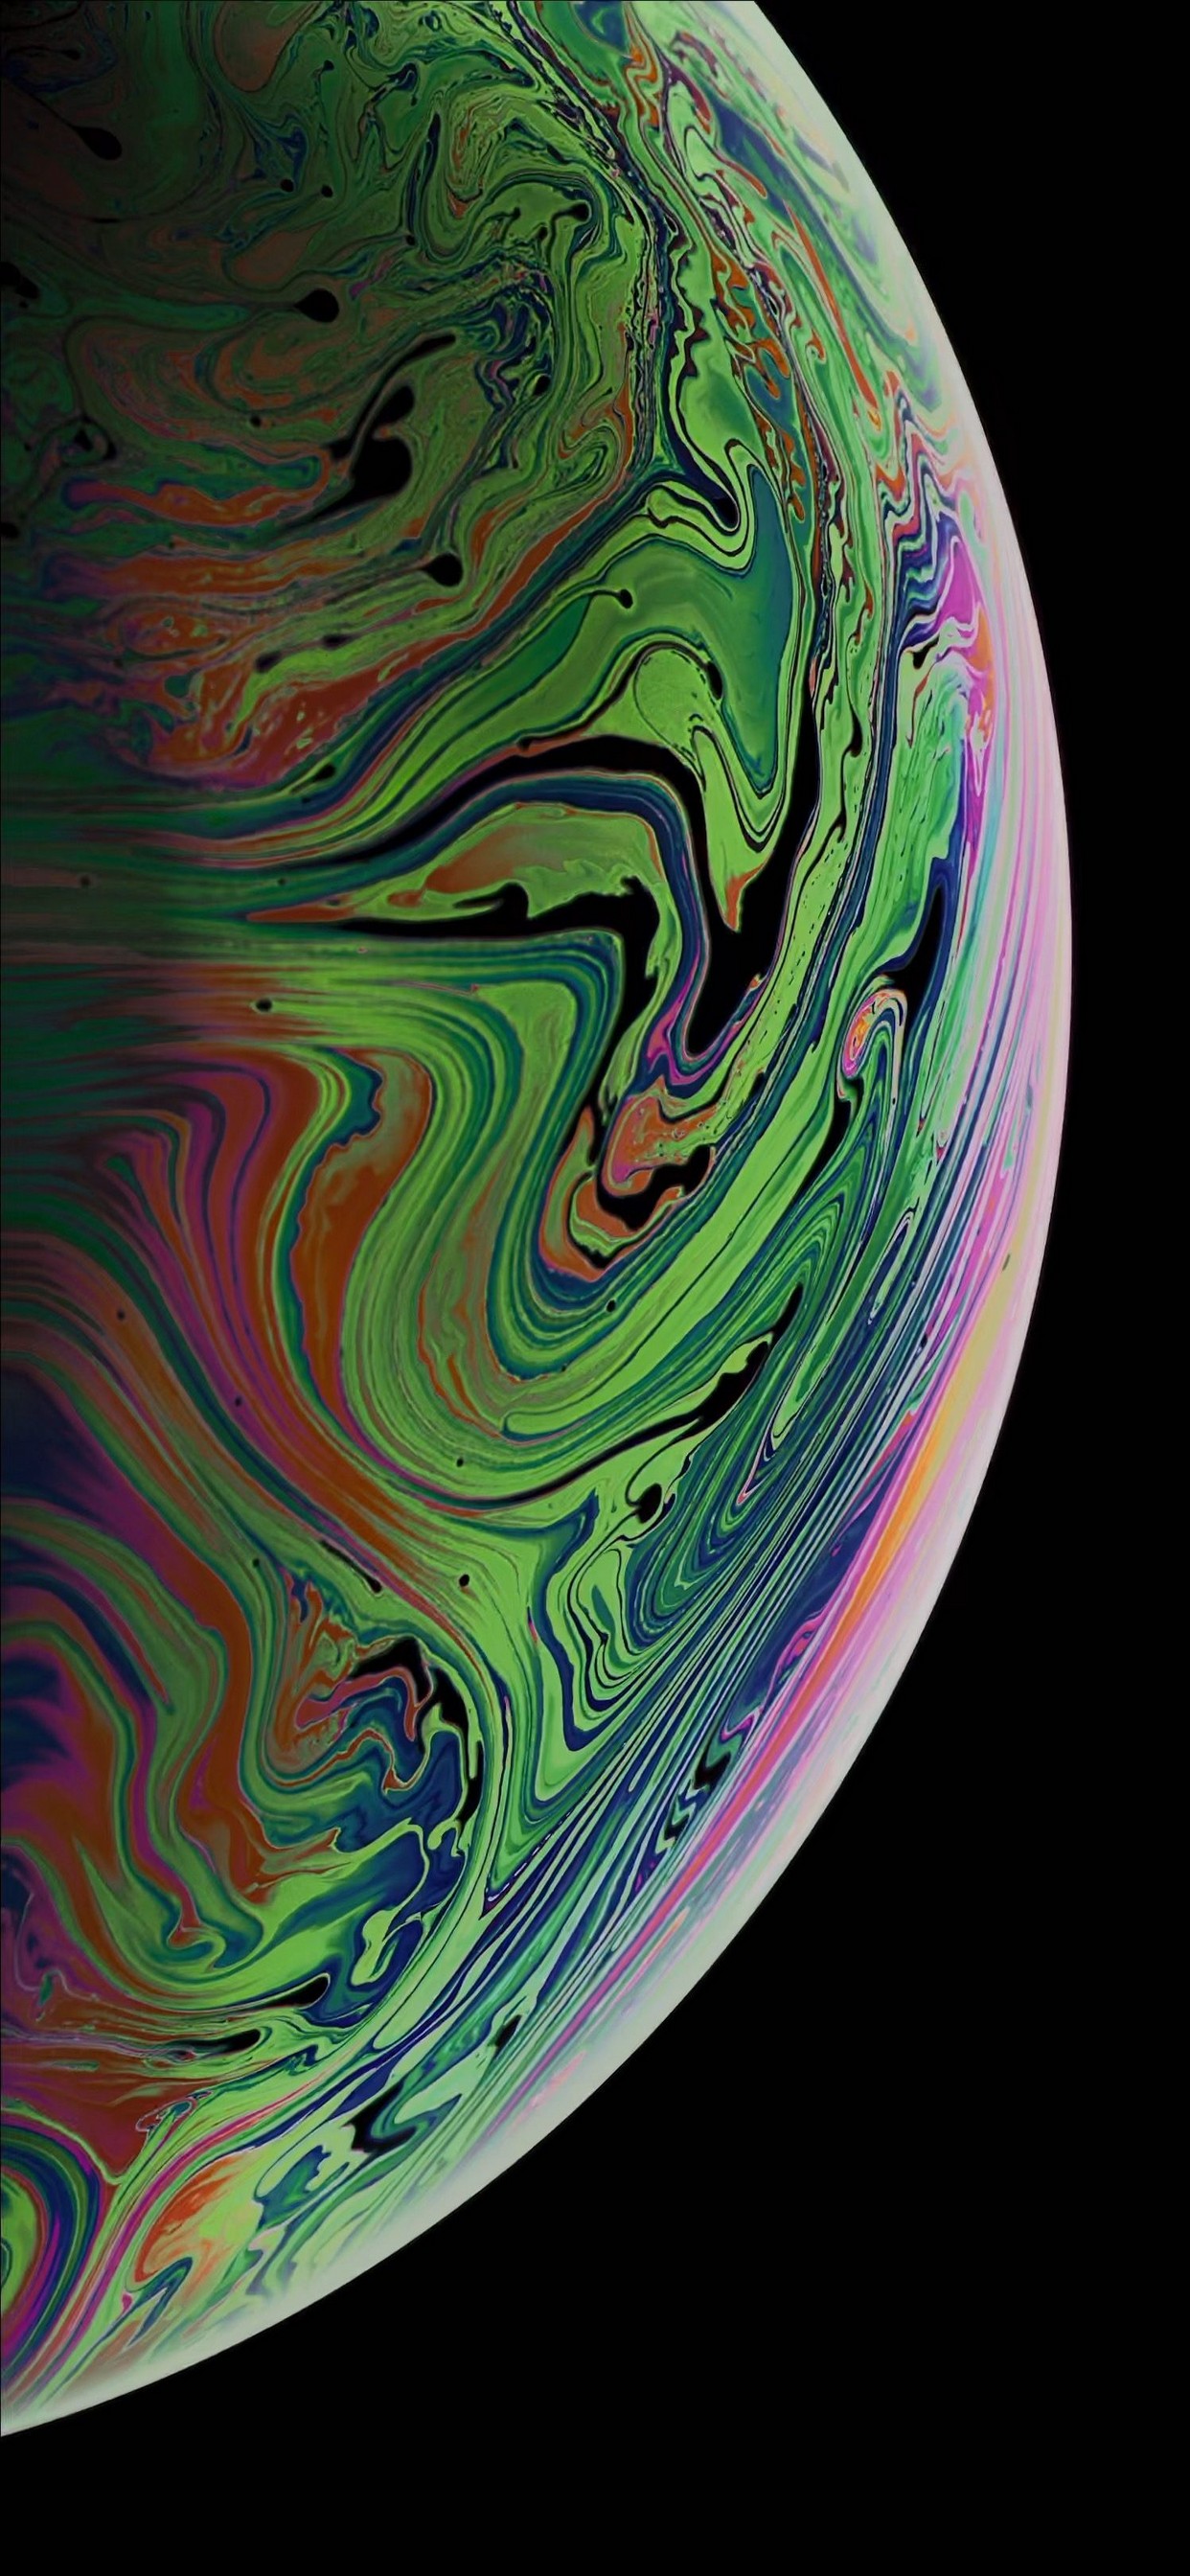 iPhone XS Max Wallpaper Design - 2020